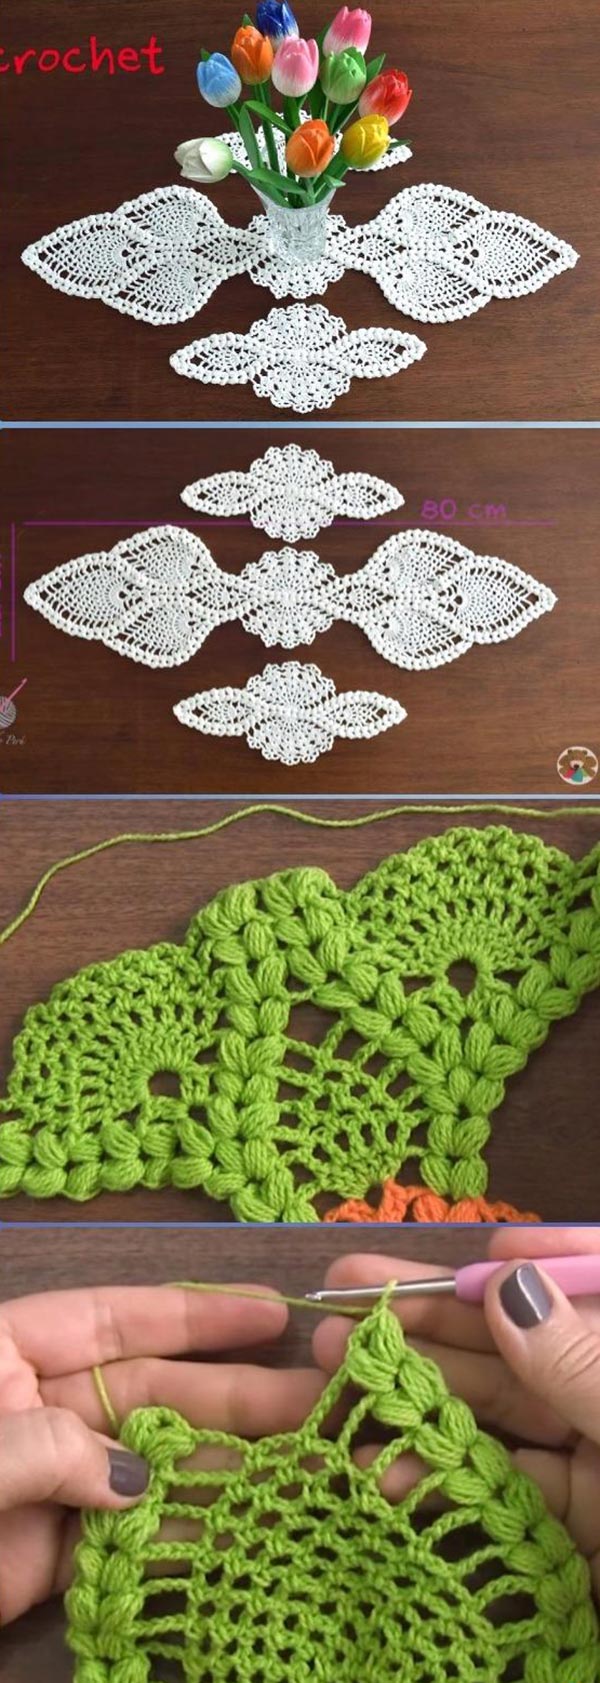 17 Fun Crochet Table Runner Ideas With, Free Easy Crochet Dresser Scarf Patterns